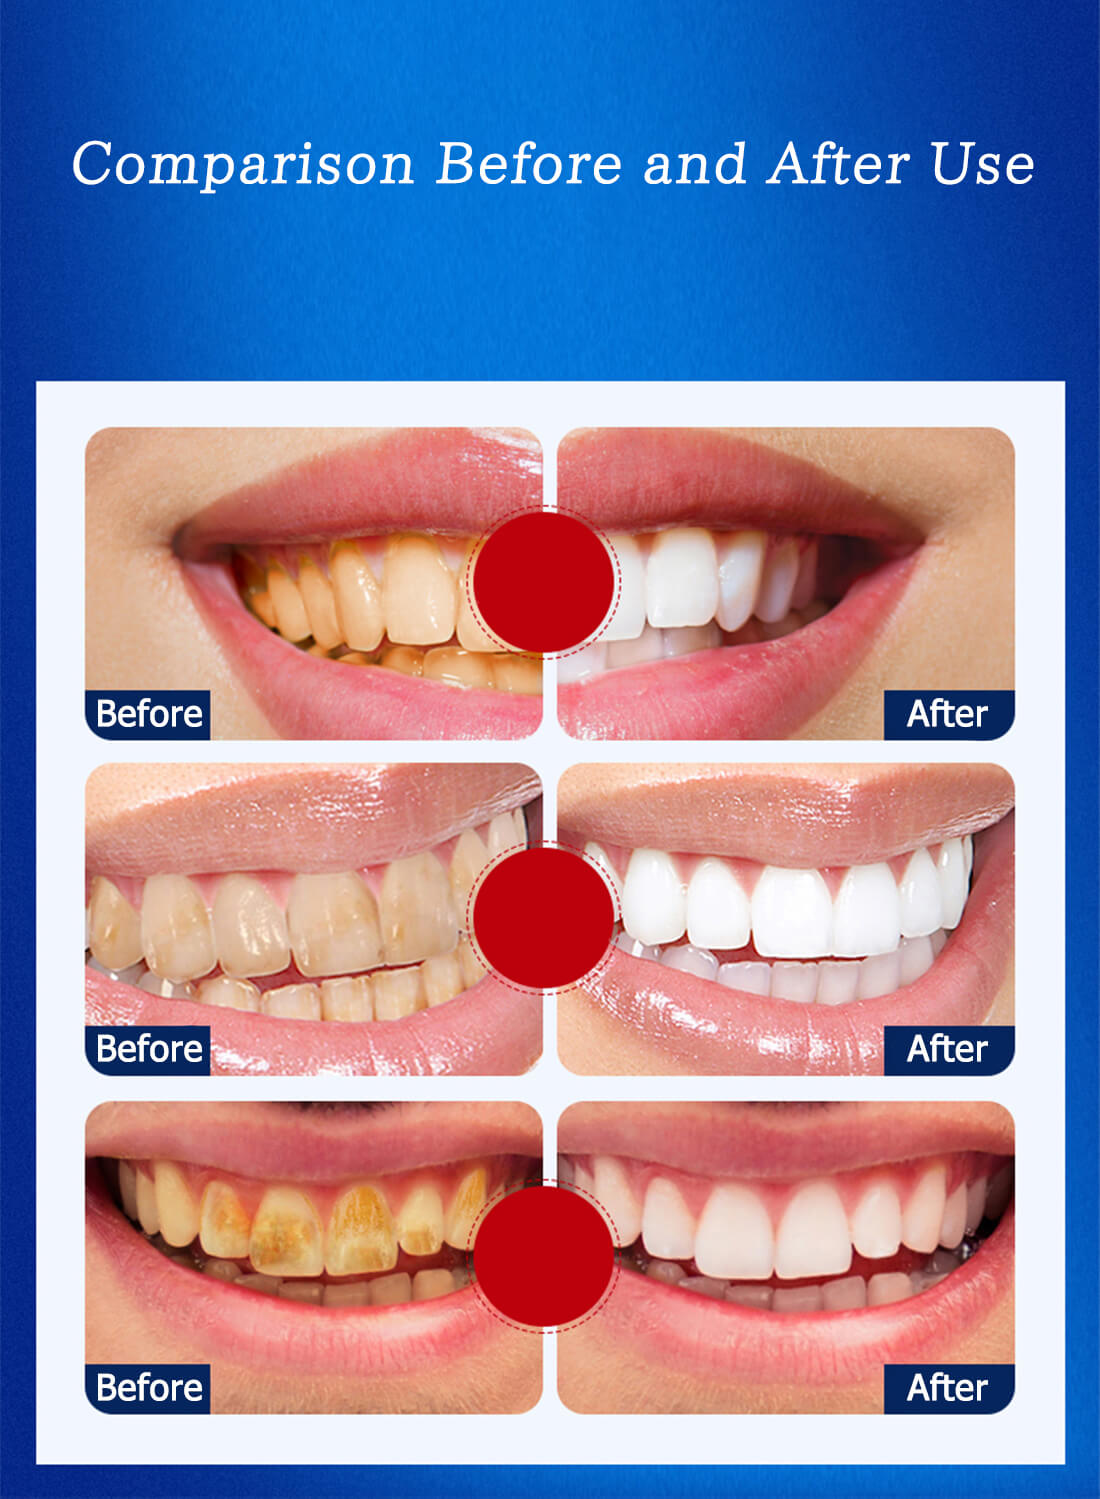 5D White Teeth Whitening Strips